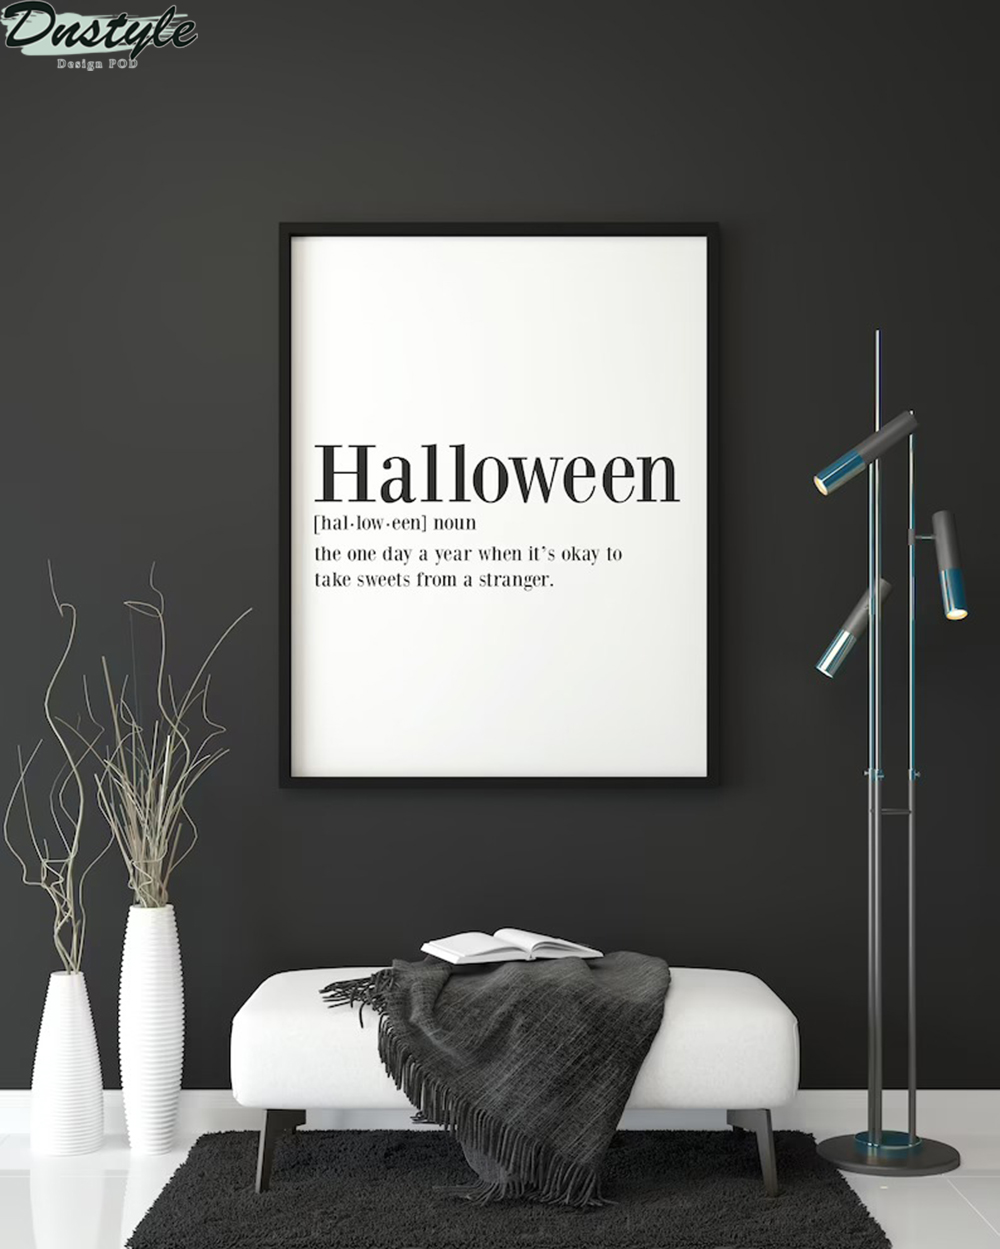 Halloween definition poster 1